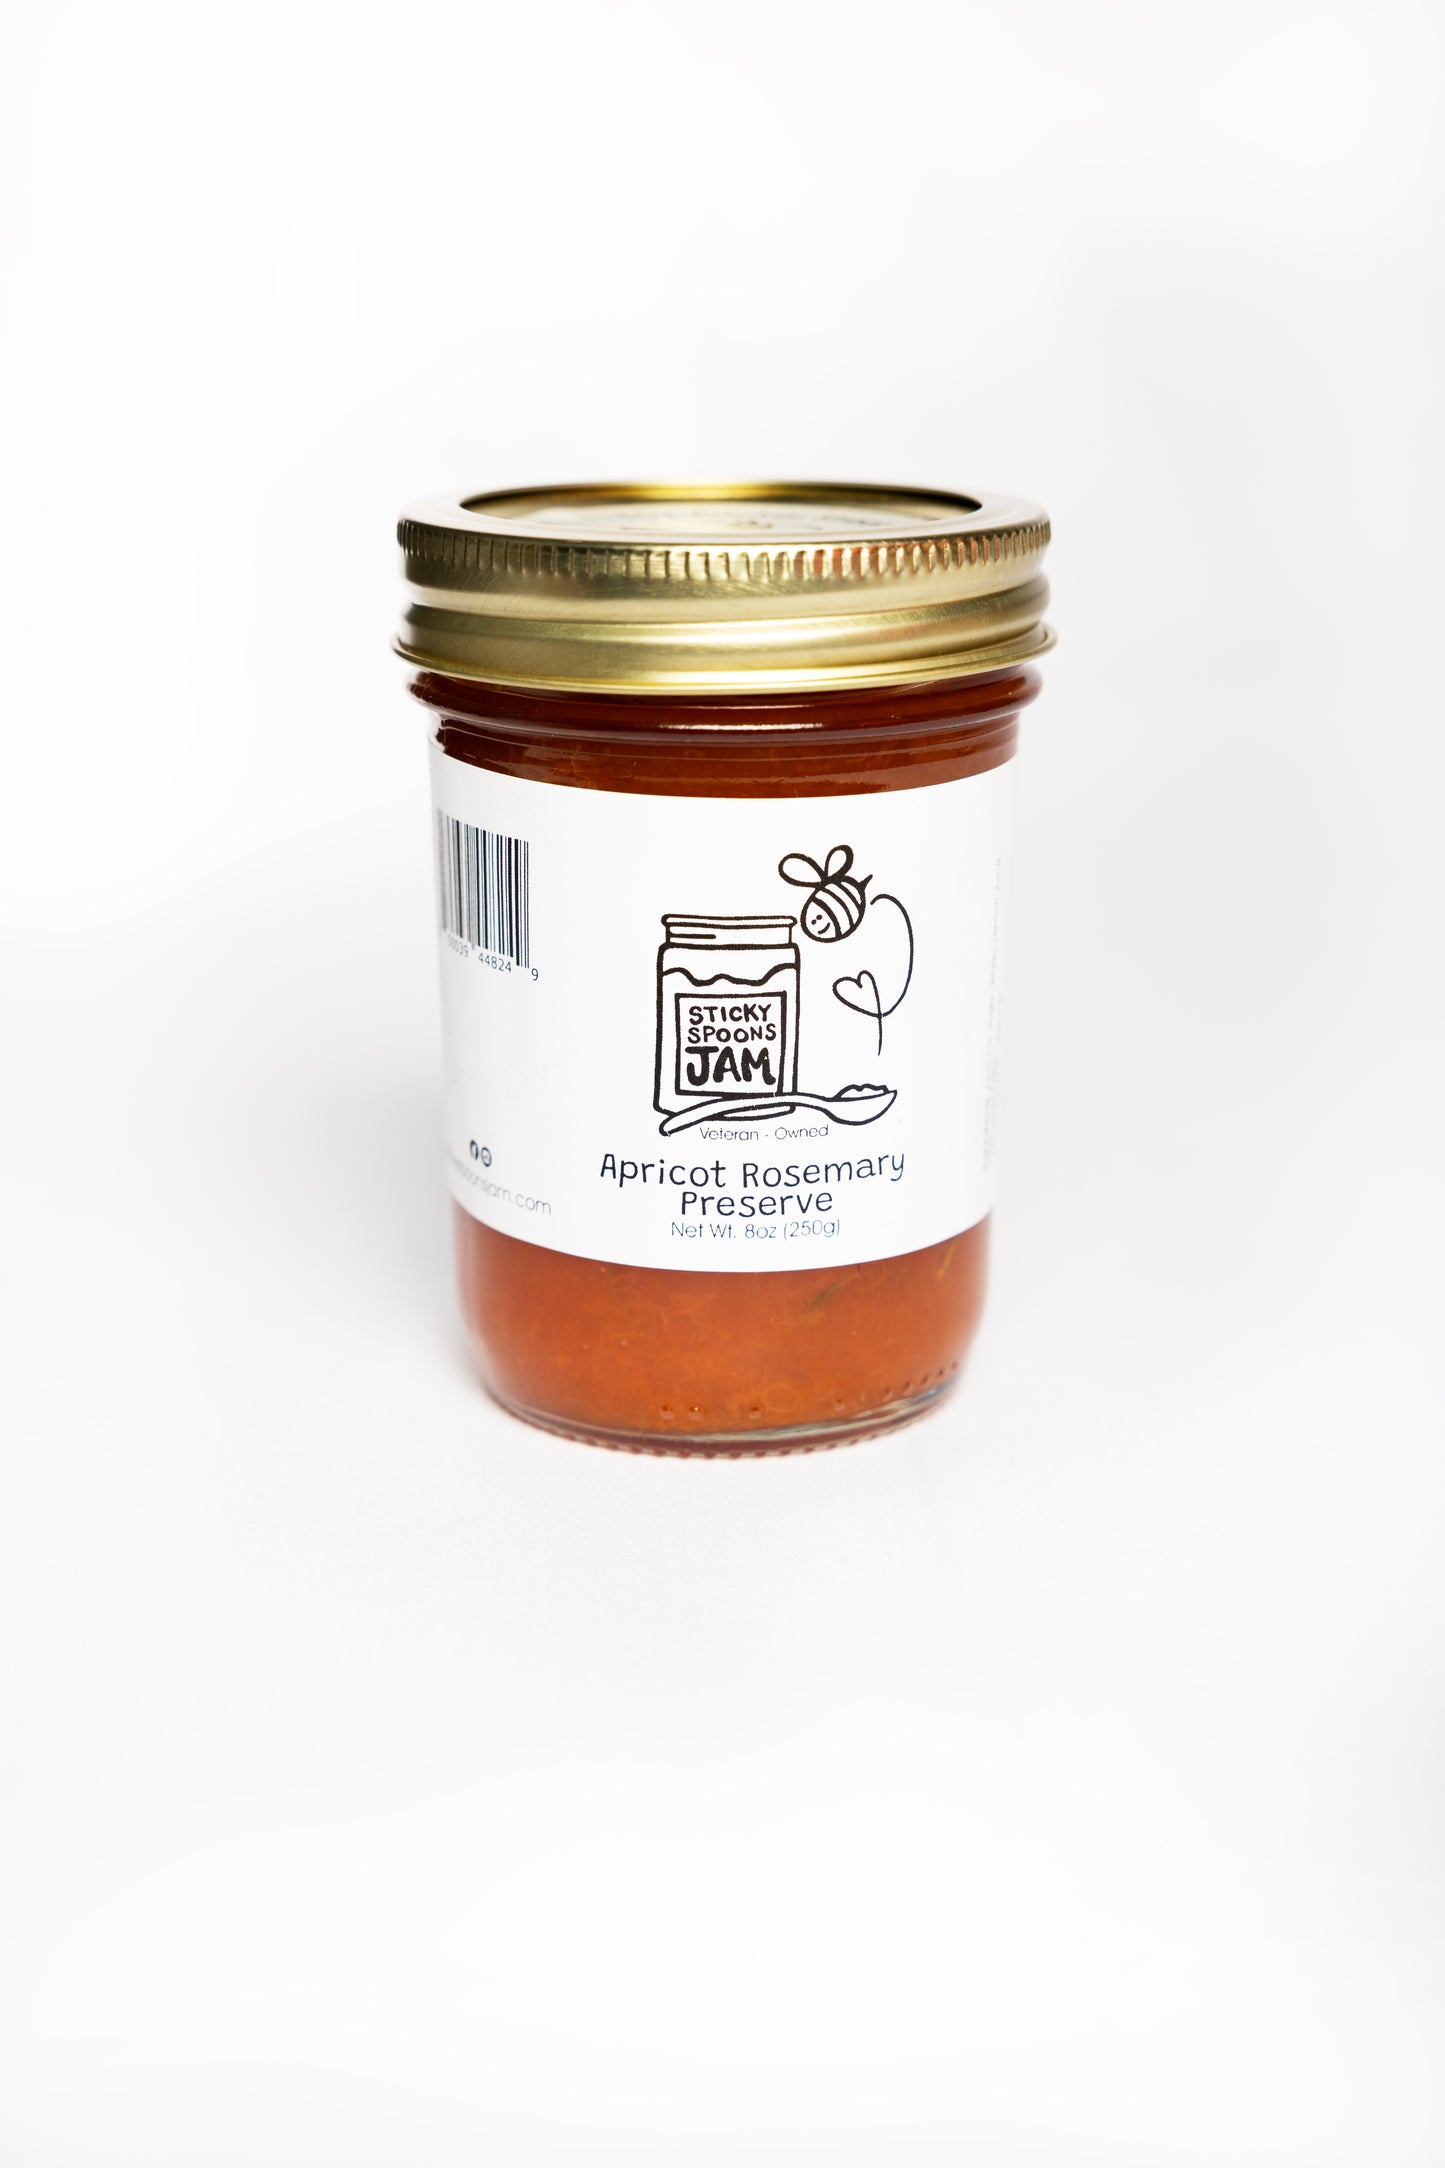 8oz jar of Sticky Spoons Jam Apricot Rosemary Preserve